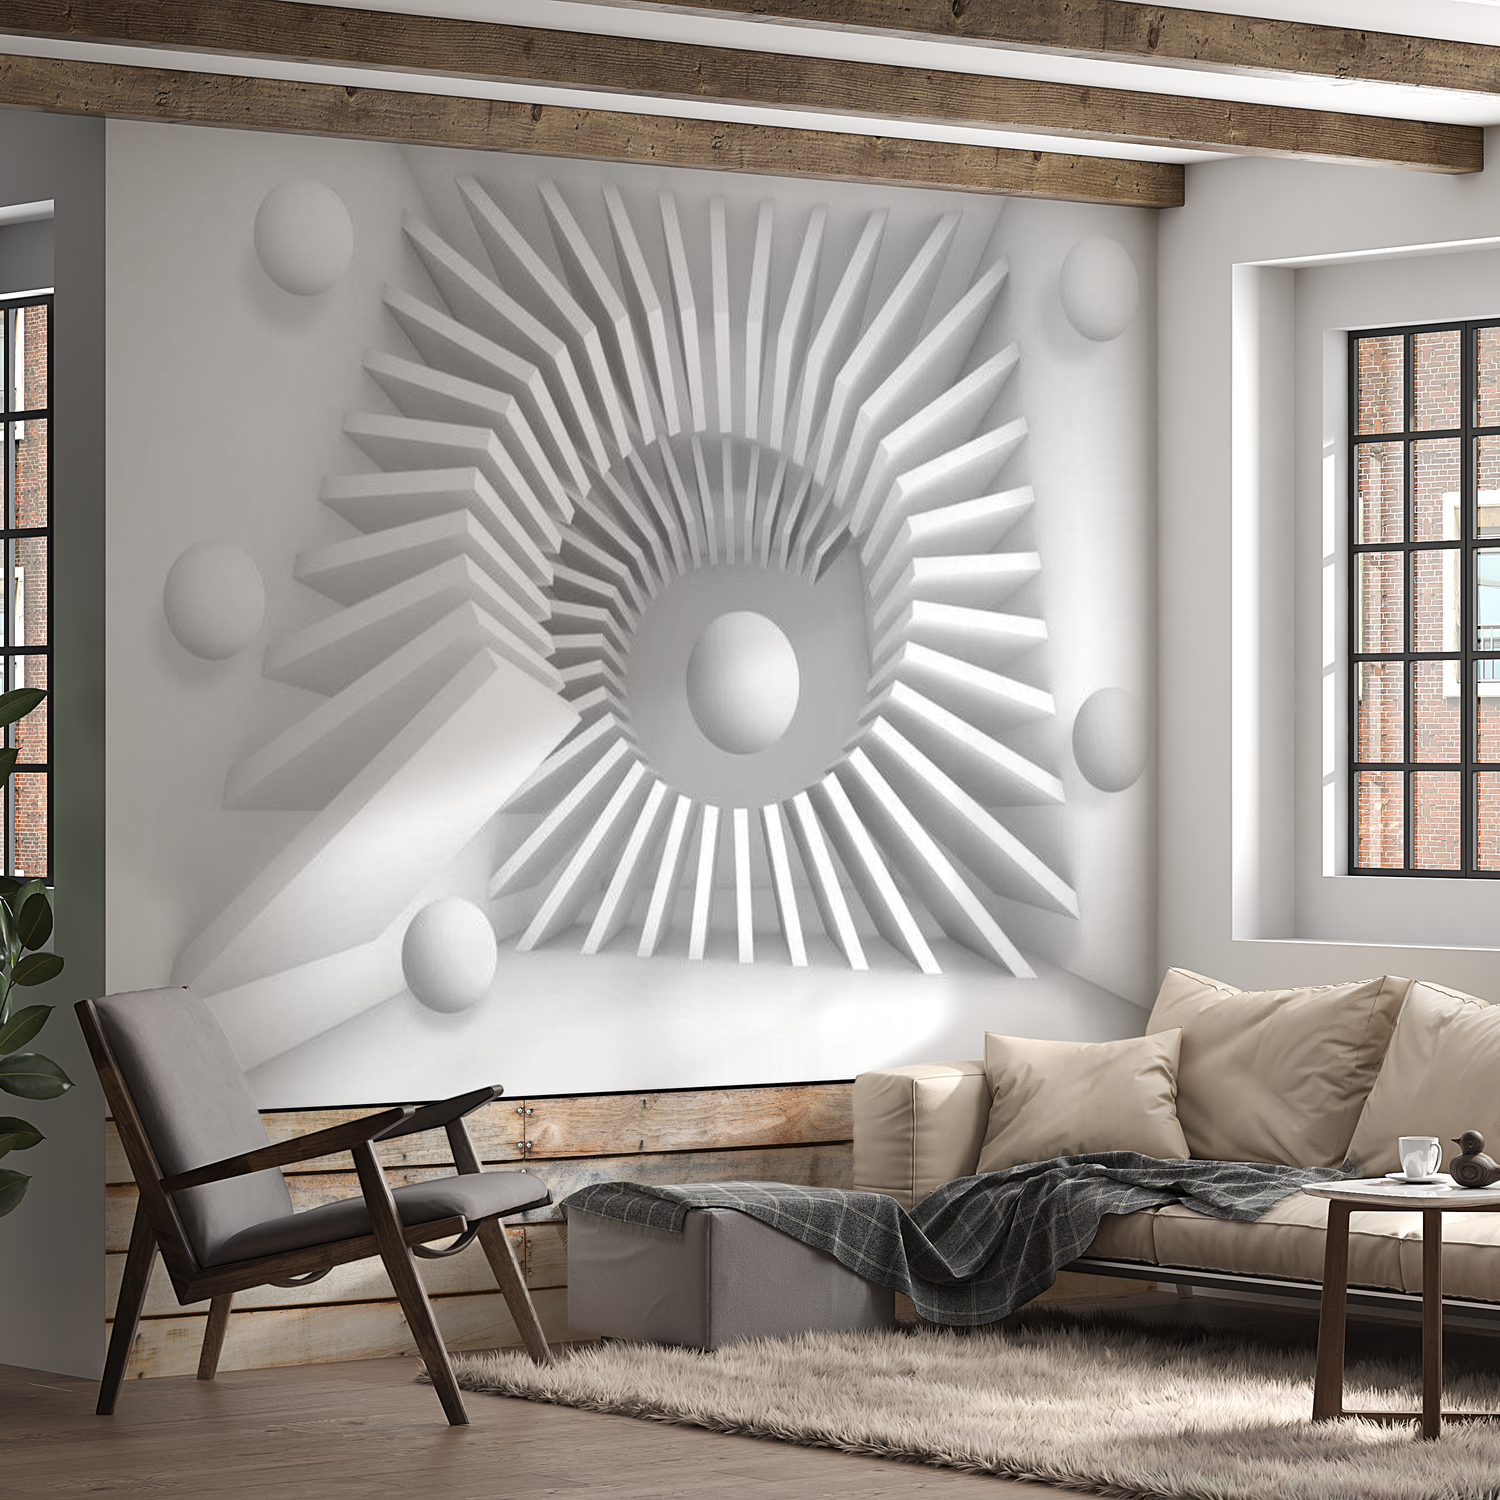 3D Illusion Wallpaper Wall Mural - White Jigsaw 39"Wx27"H